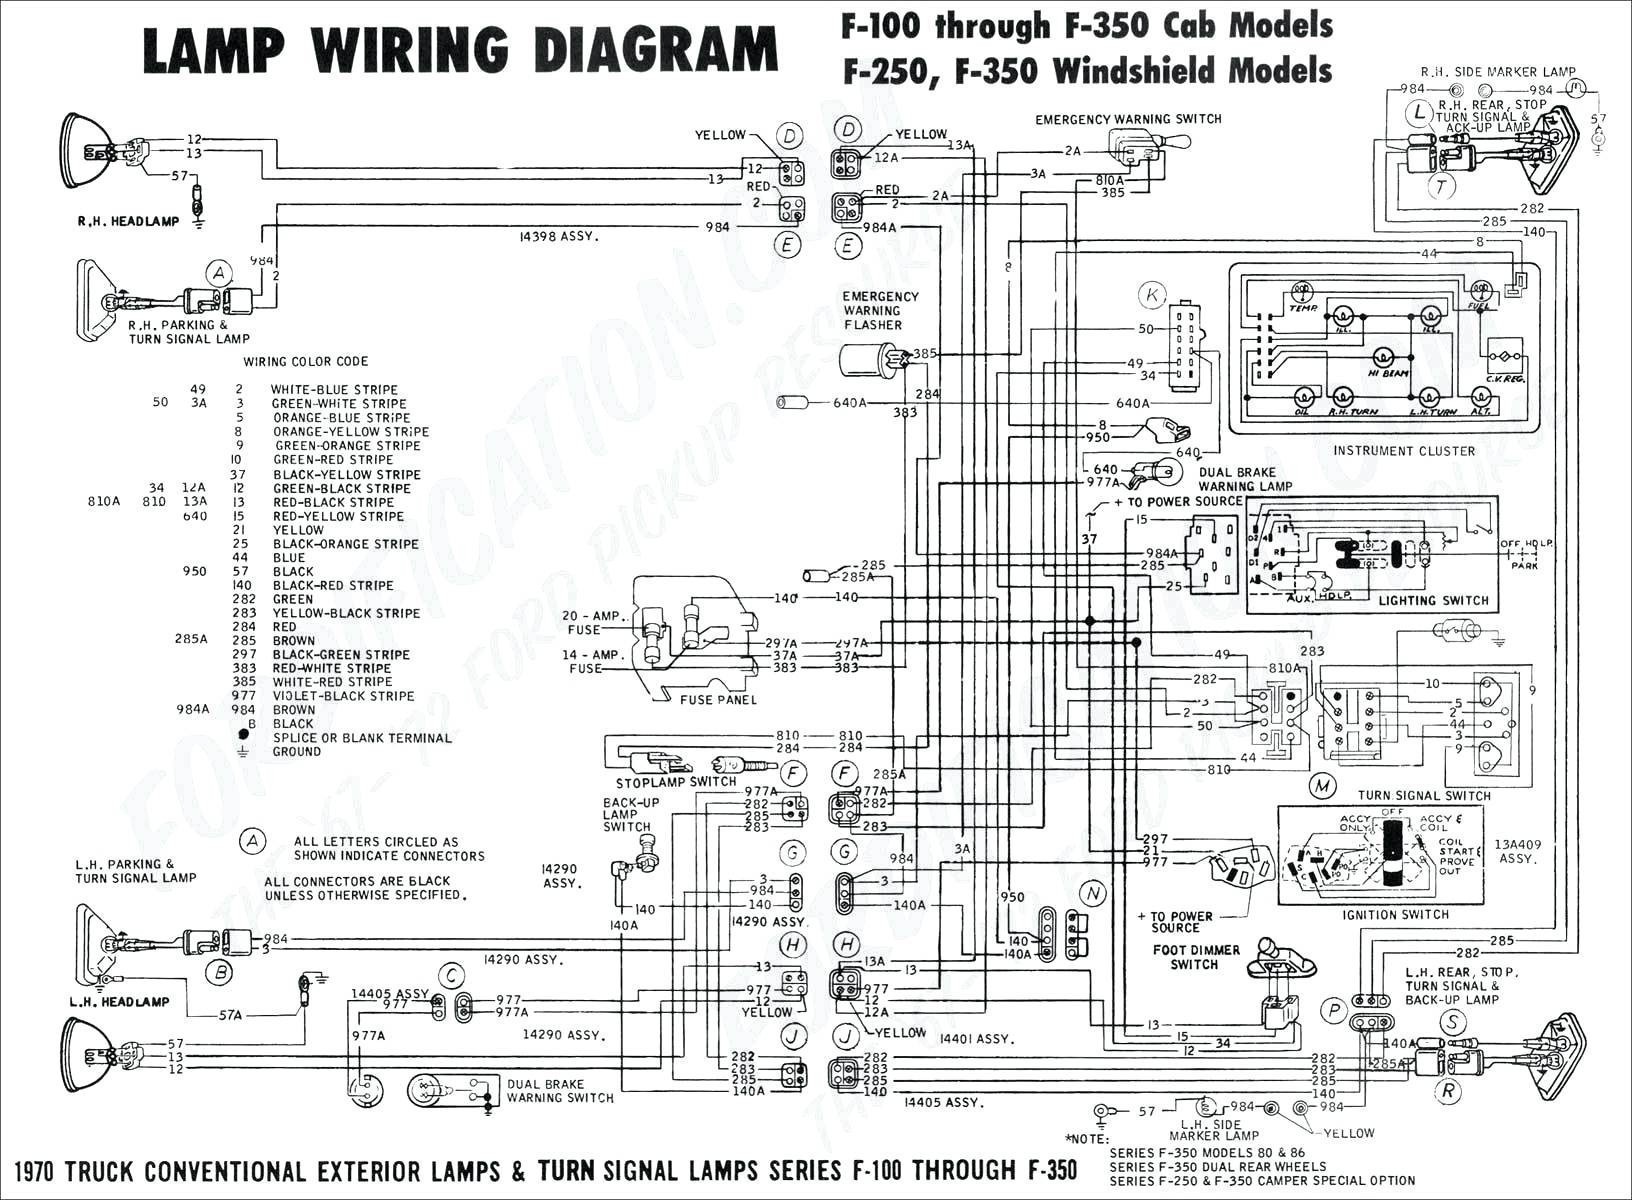 Honda Ex5500 Wiring Diagram Save Honda Beat Motorcycle Wiring Diagram Fresh Simple Y Plan Wiring